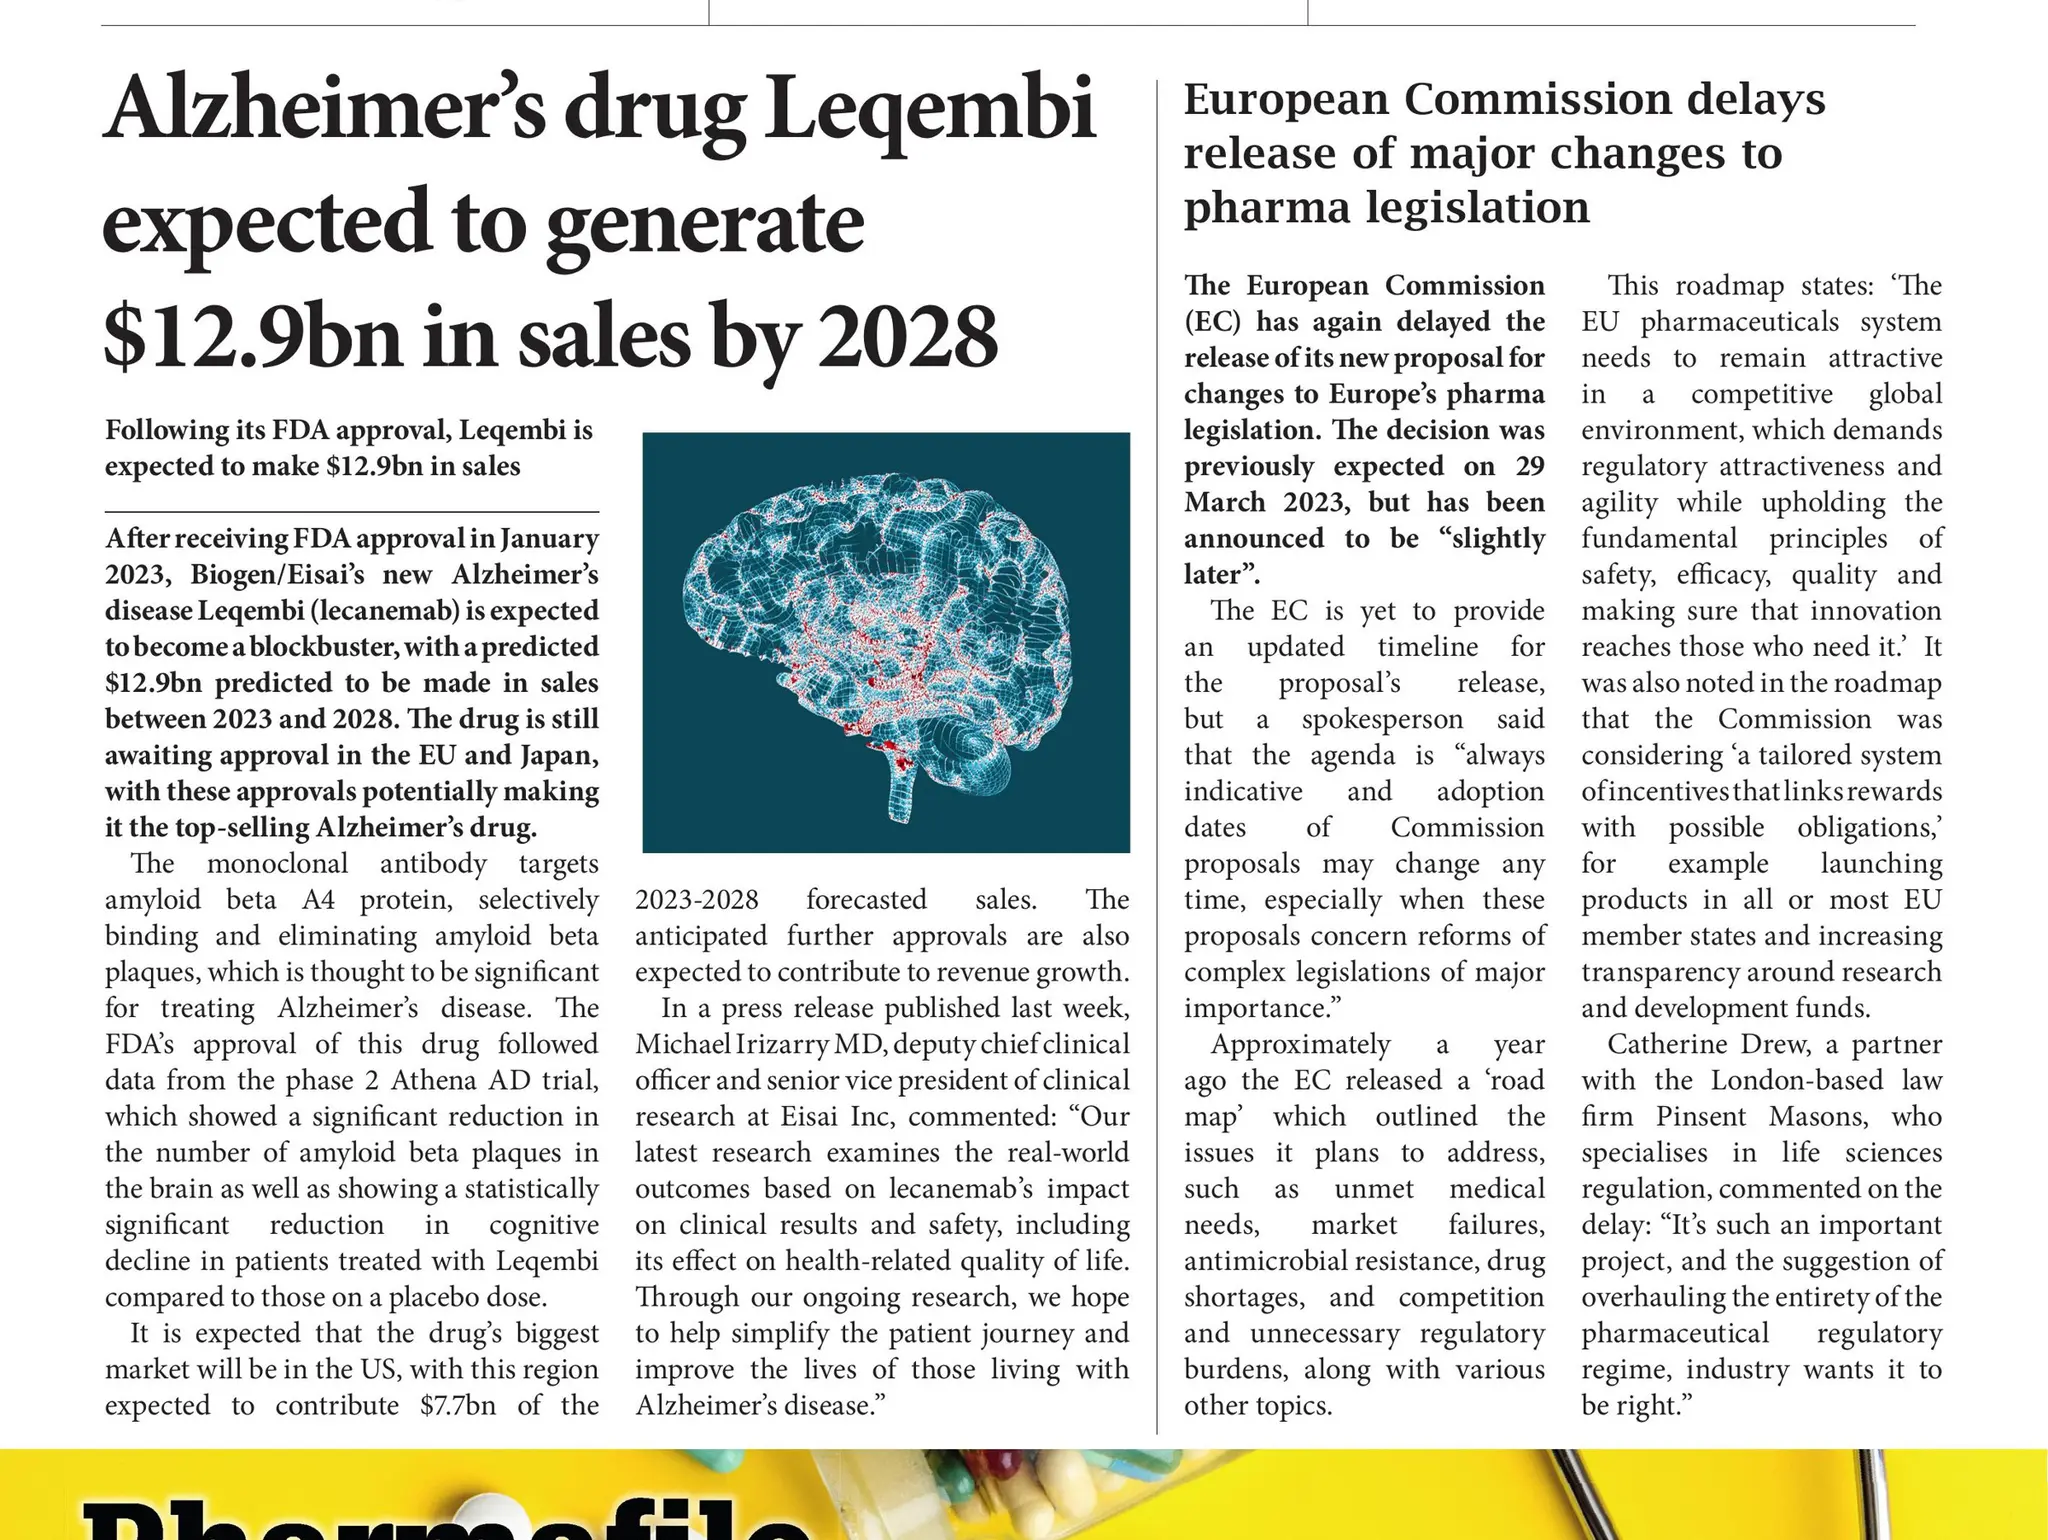 European Commission delays release of major changes to pharma legislation